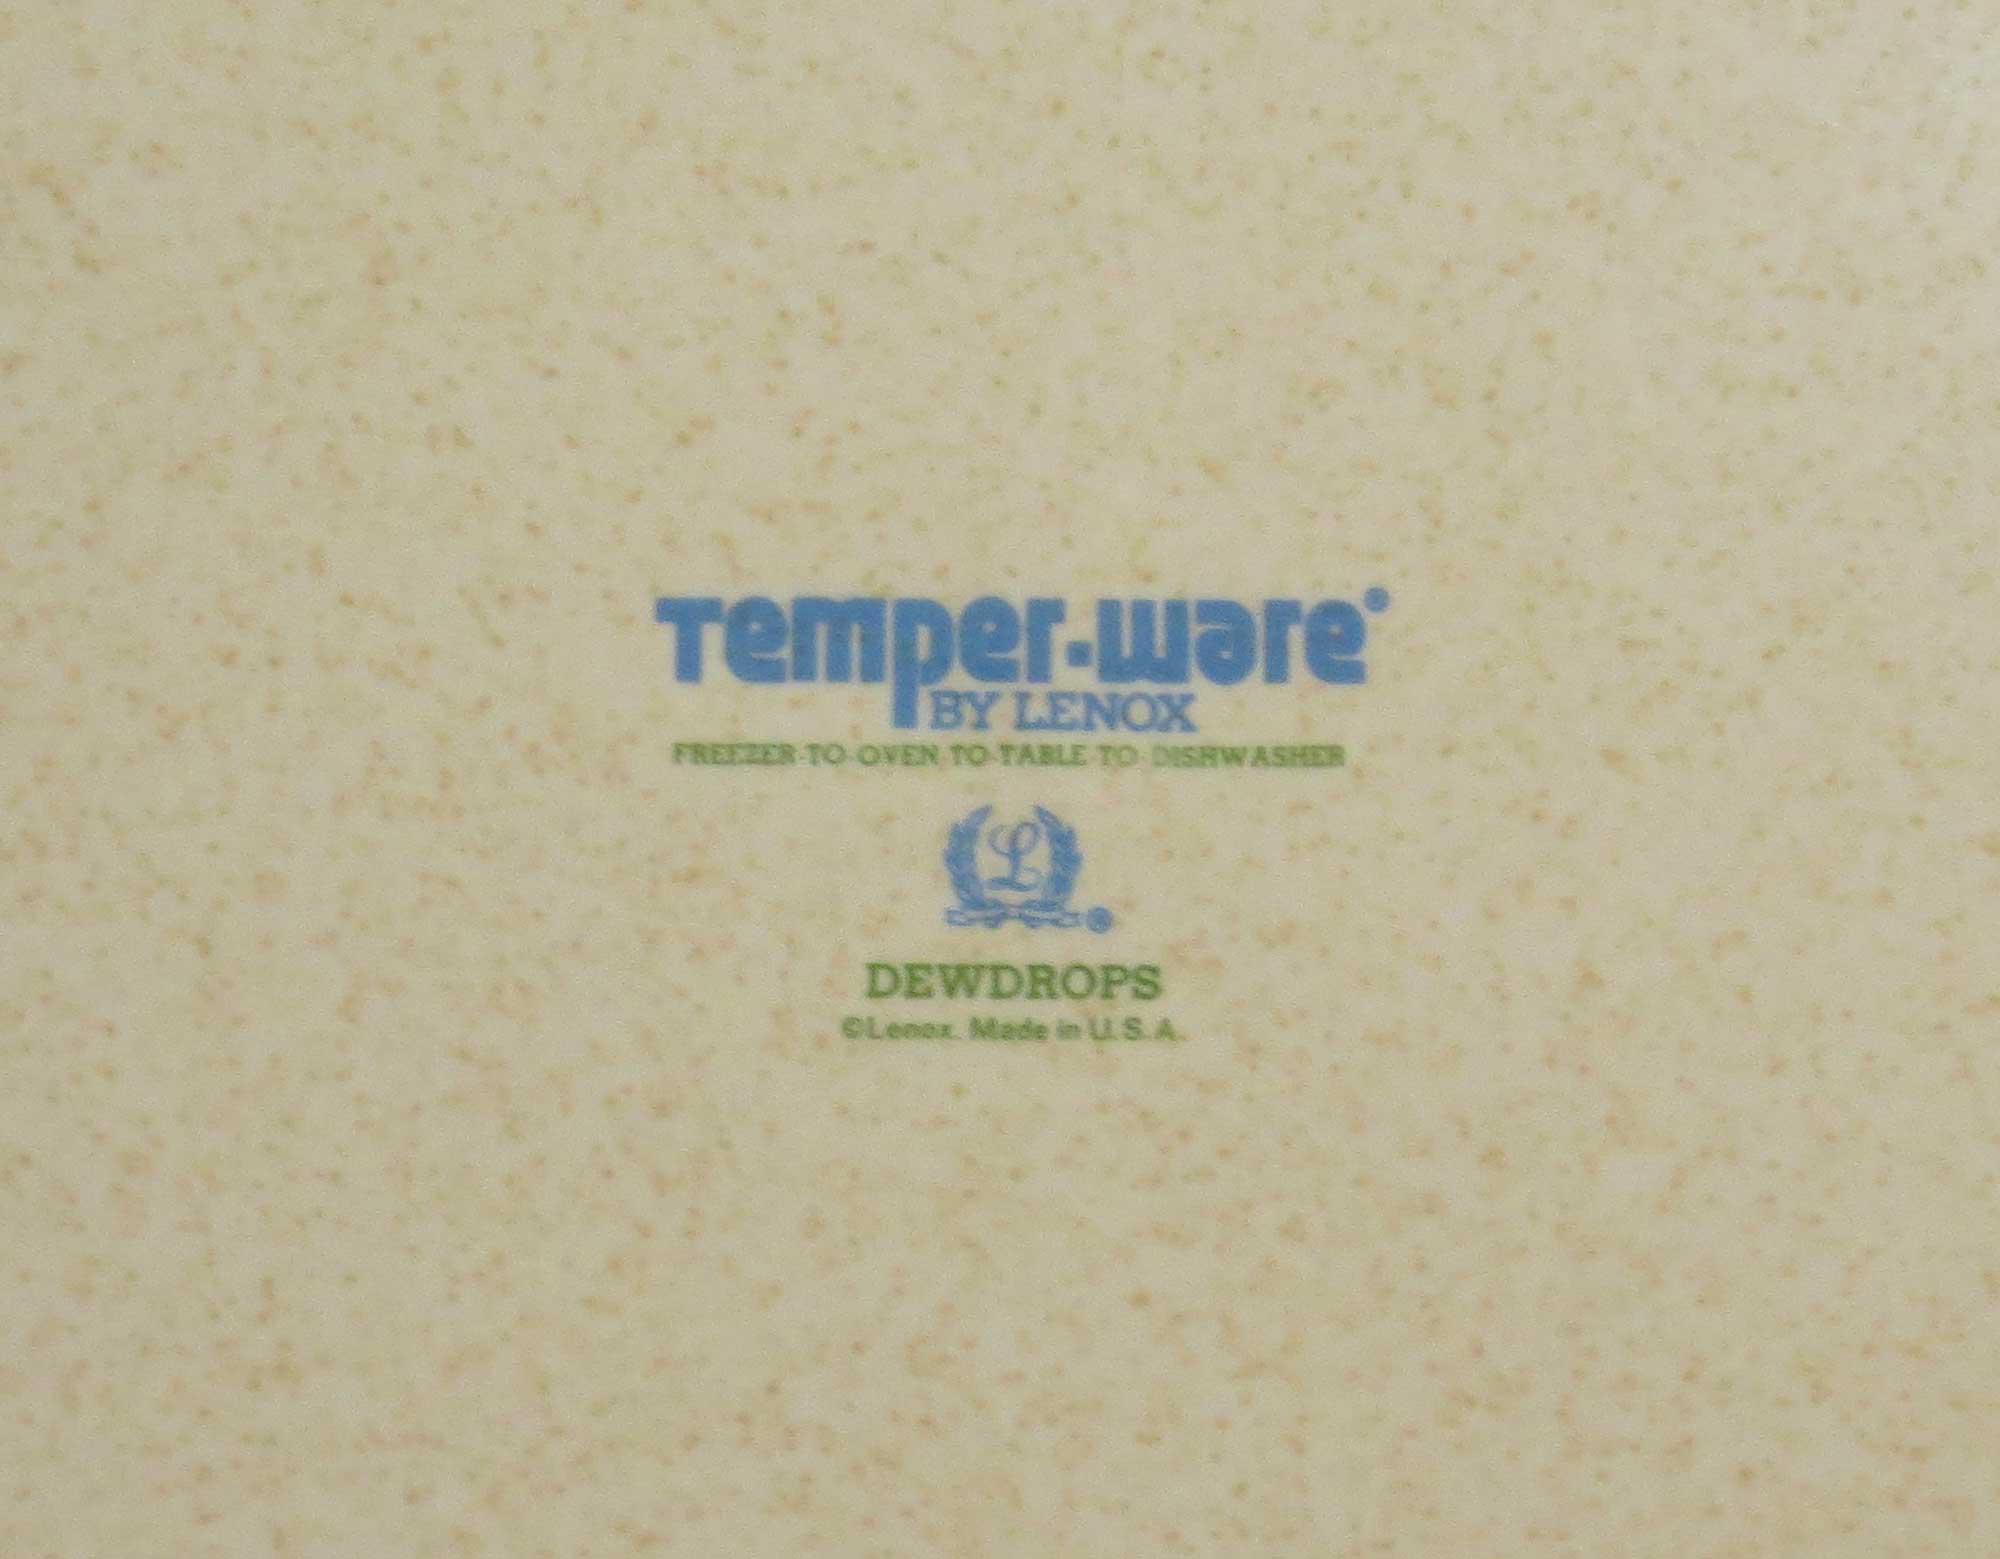 Temper-ware By LENOX DEWDROPS Made in U.S.A. Mark